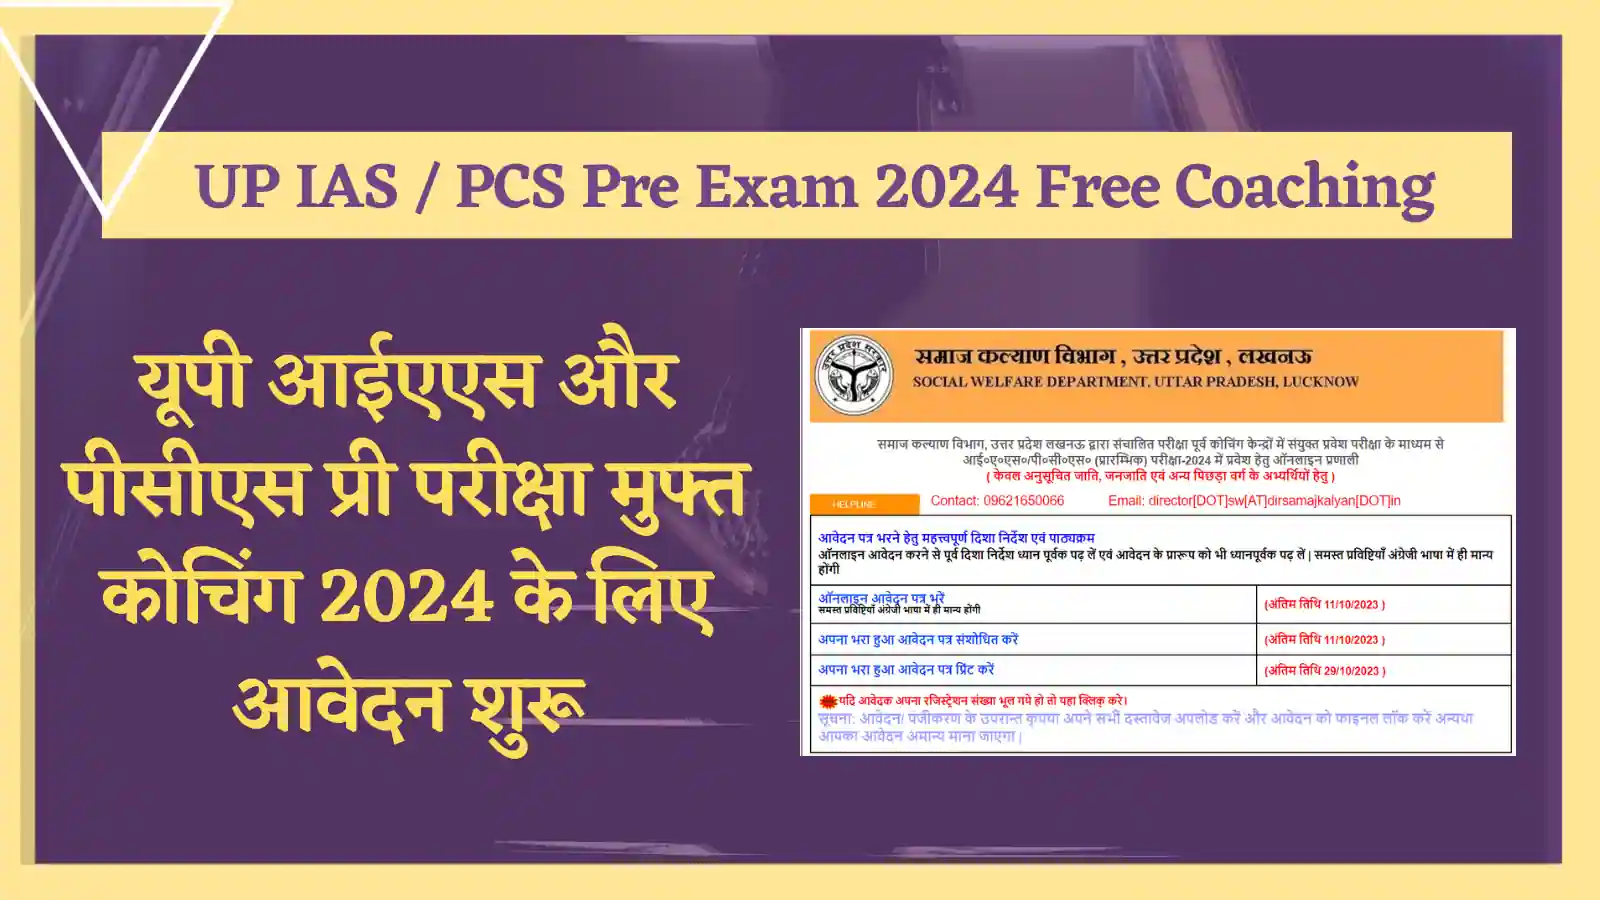  UP IAS / PCS Pre Exam 2024 Free Coaching